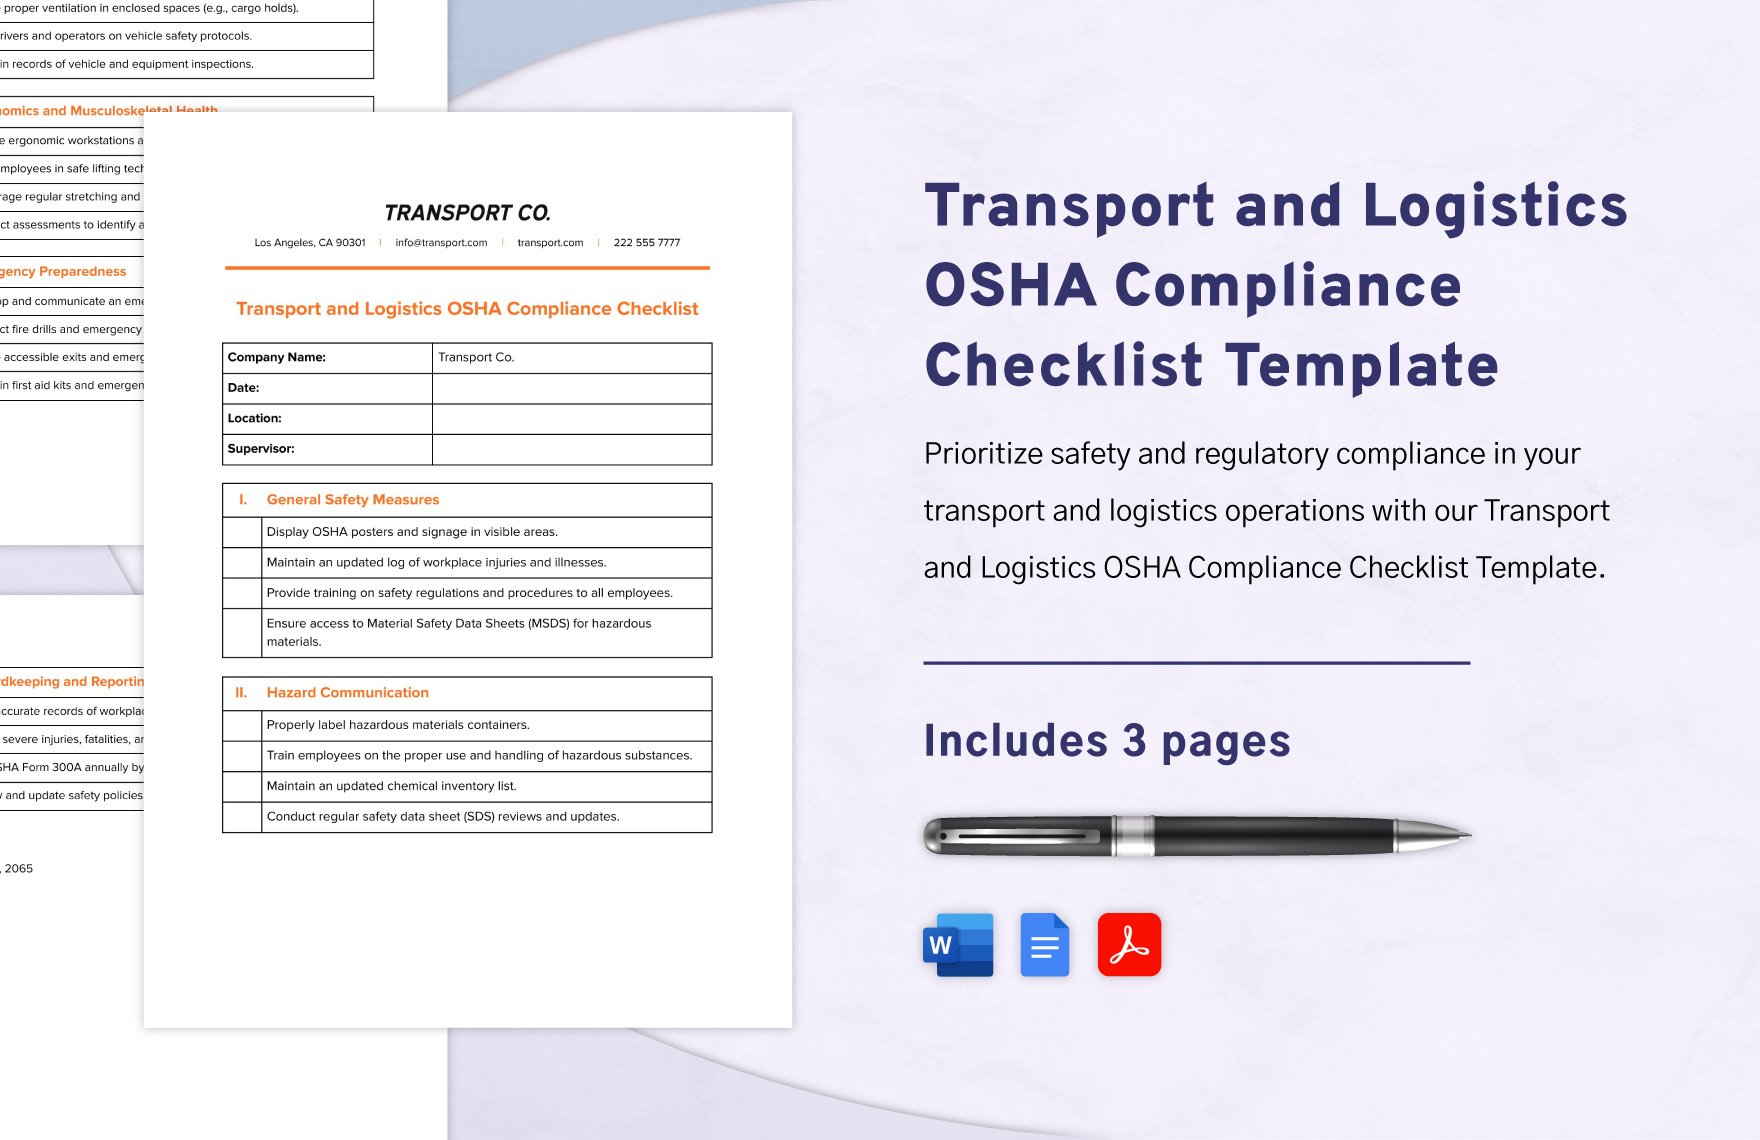 Transport and Logistics OSHA Compliance Checklist Template